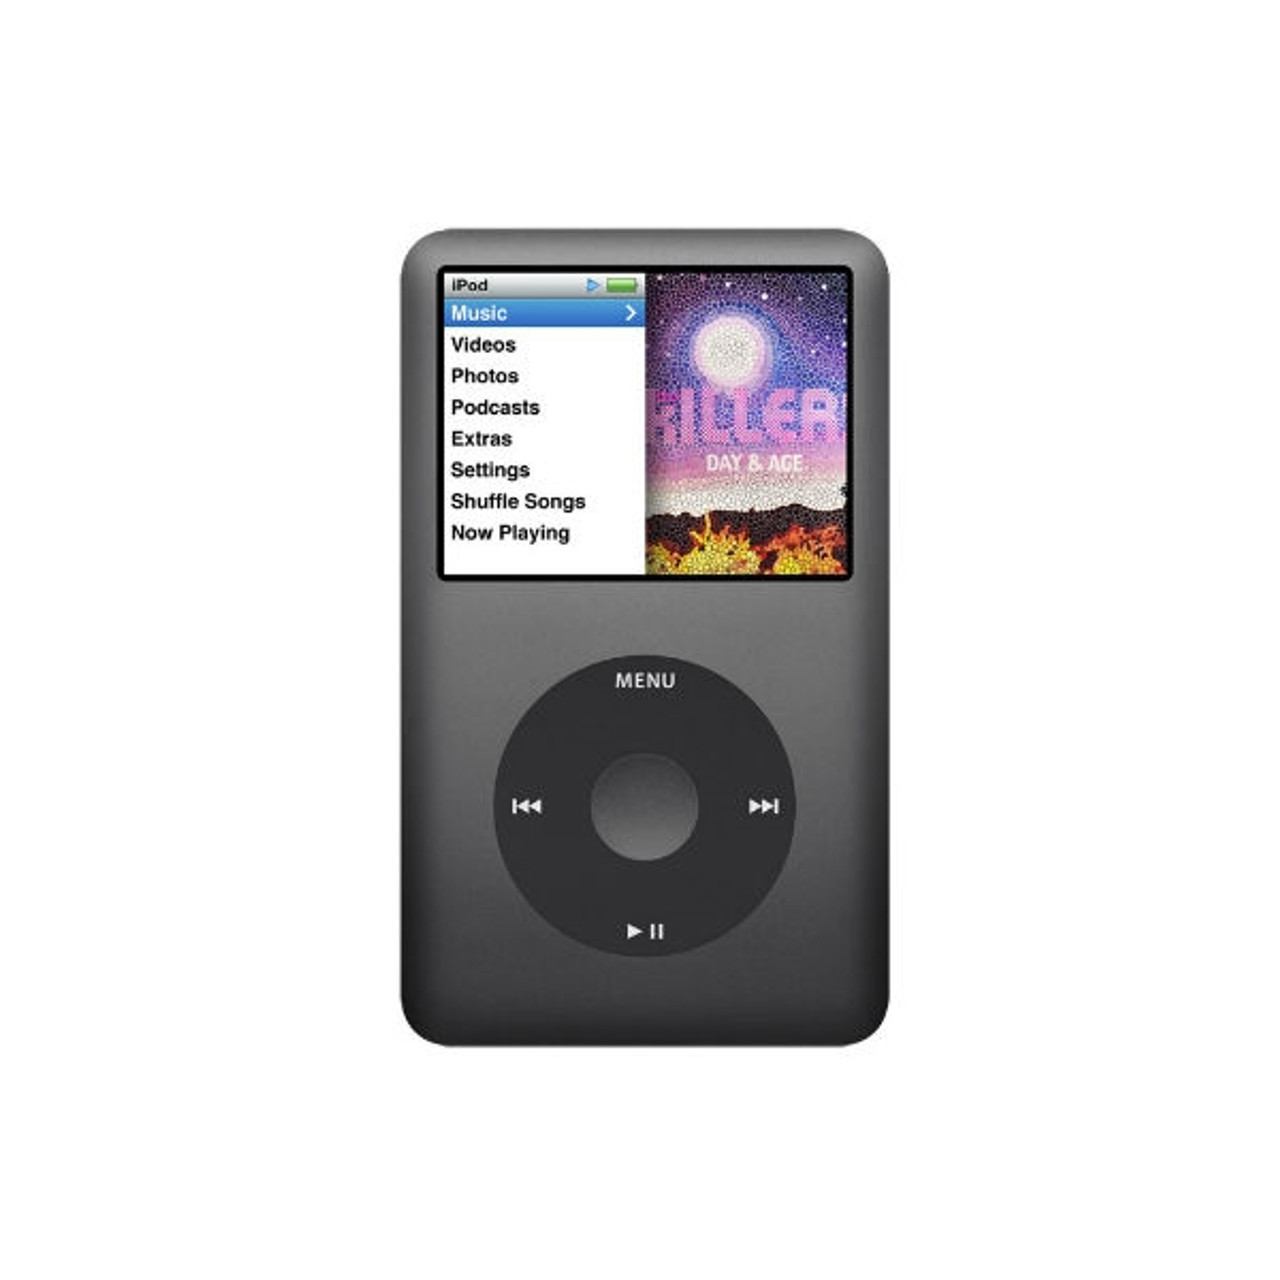 Apple iPod Classic 160GB - Black MB150LL/A - Good Condition